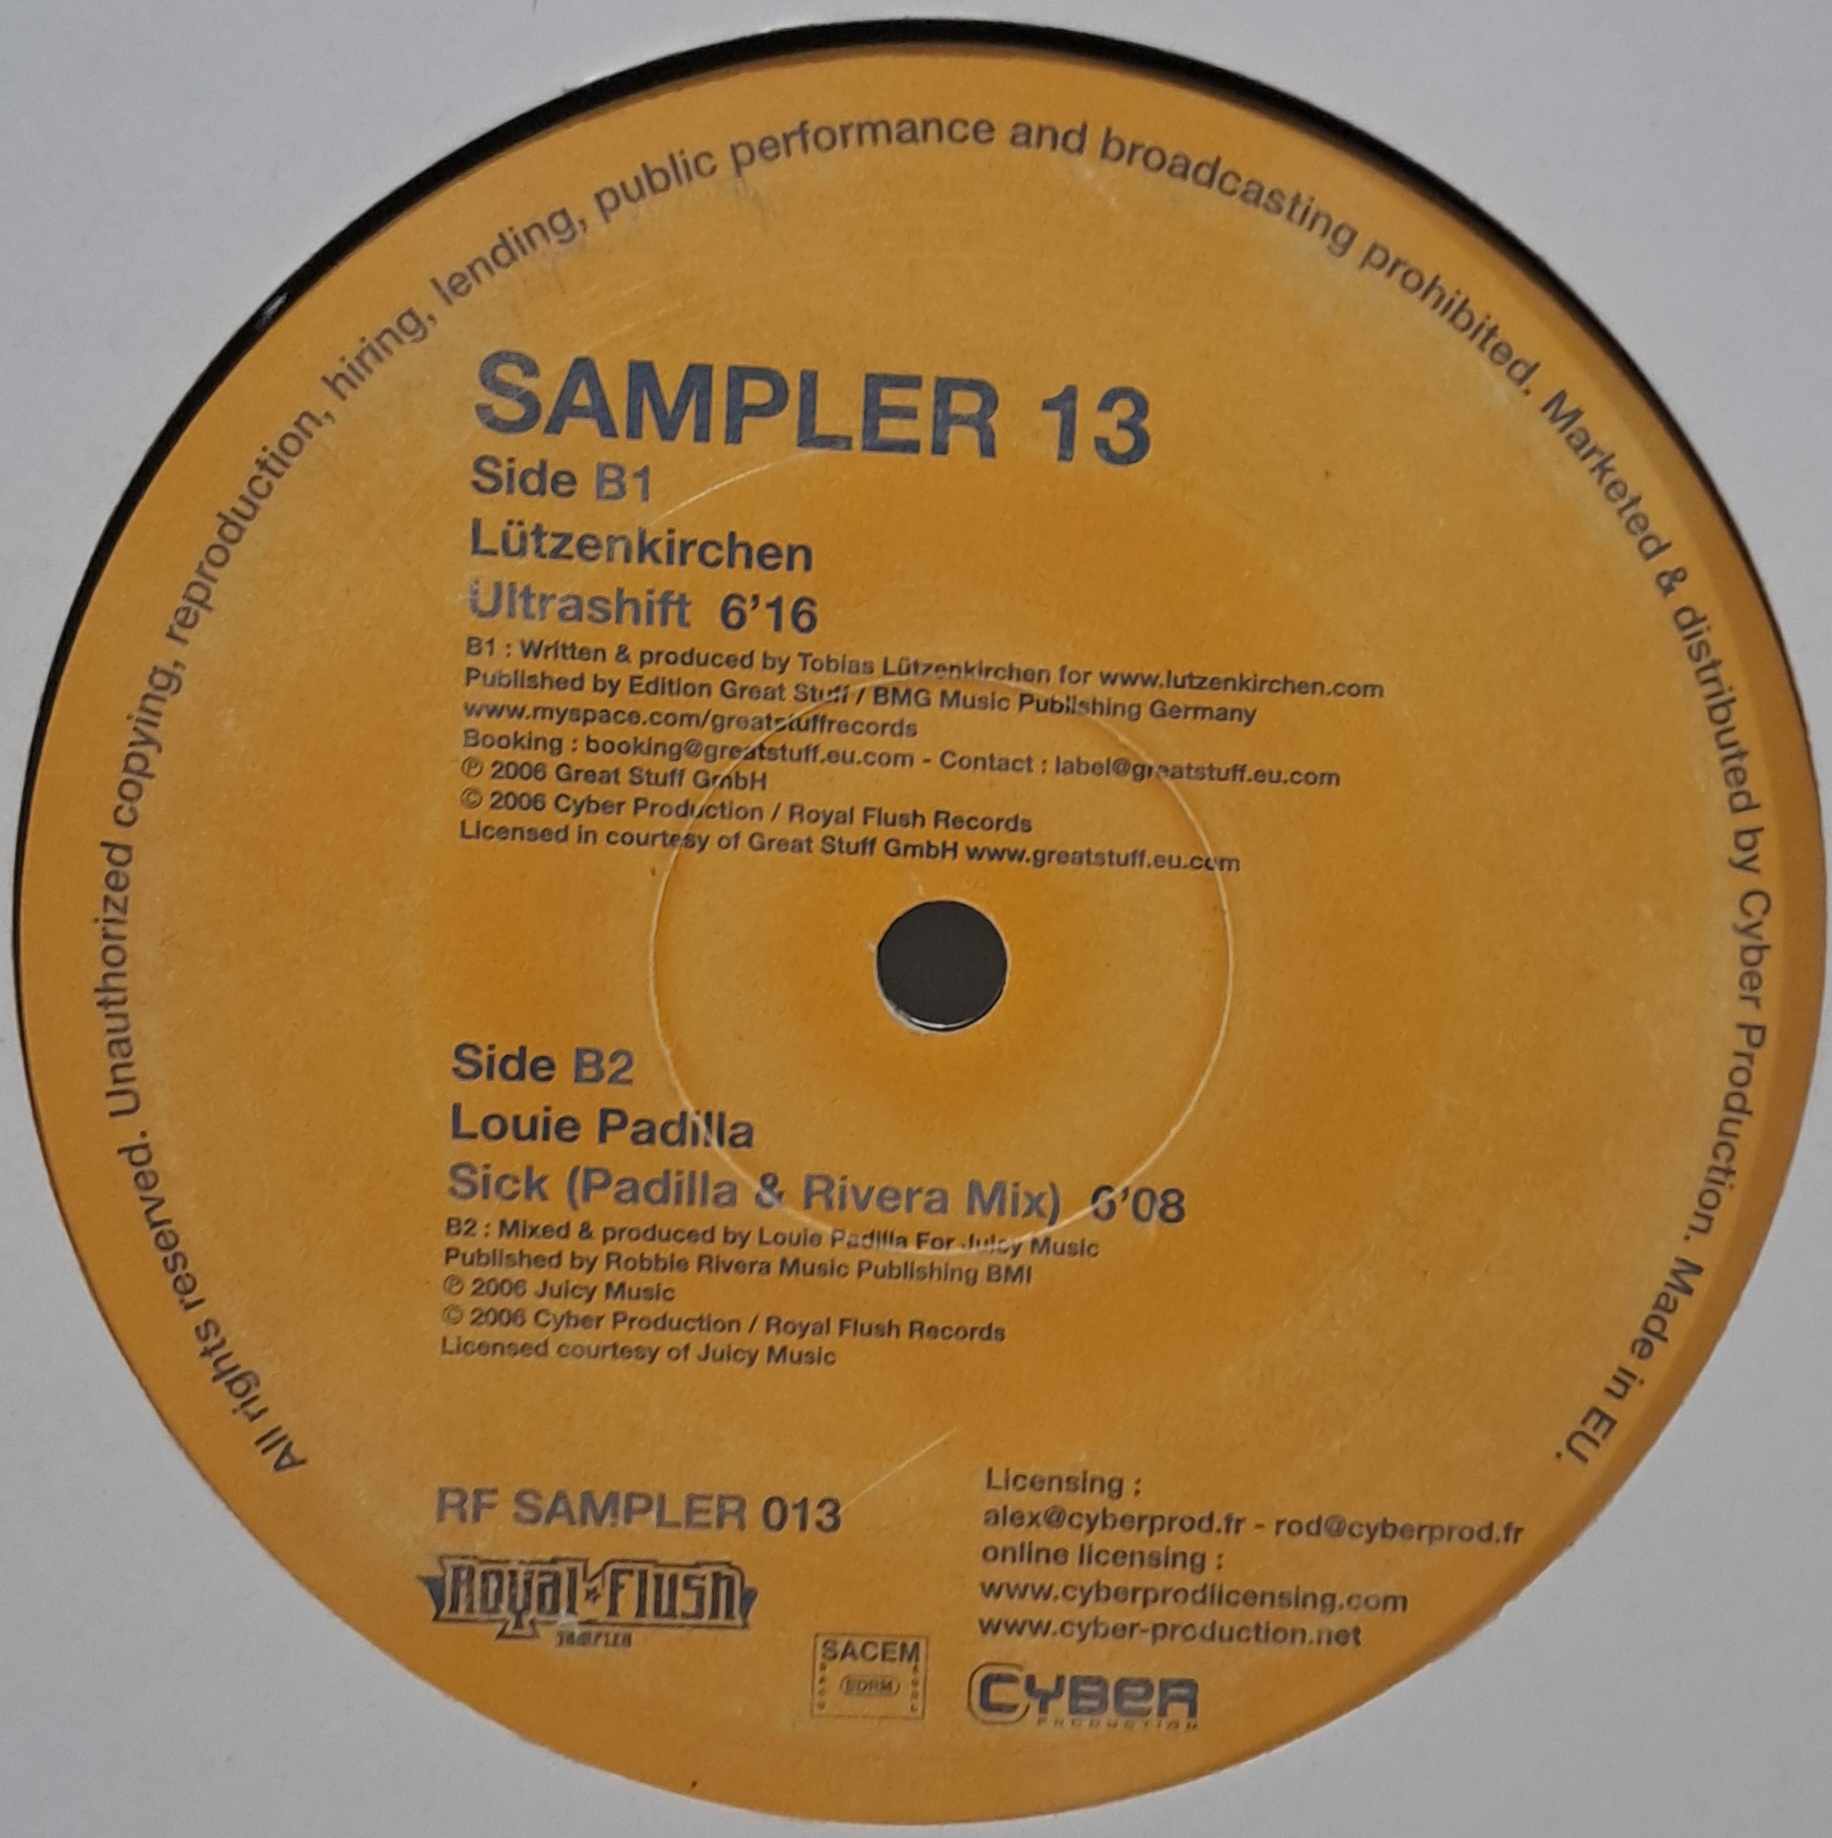 RF Sampler 013 - vinyle electro